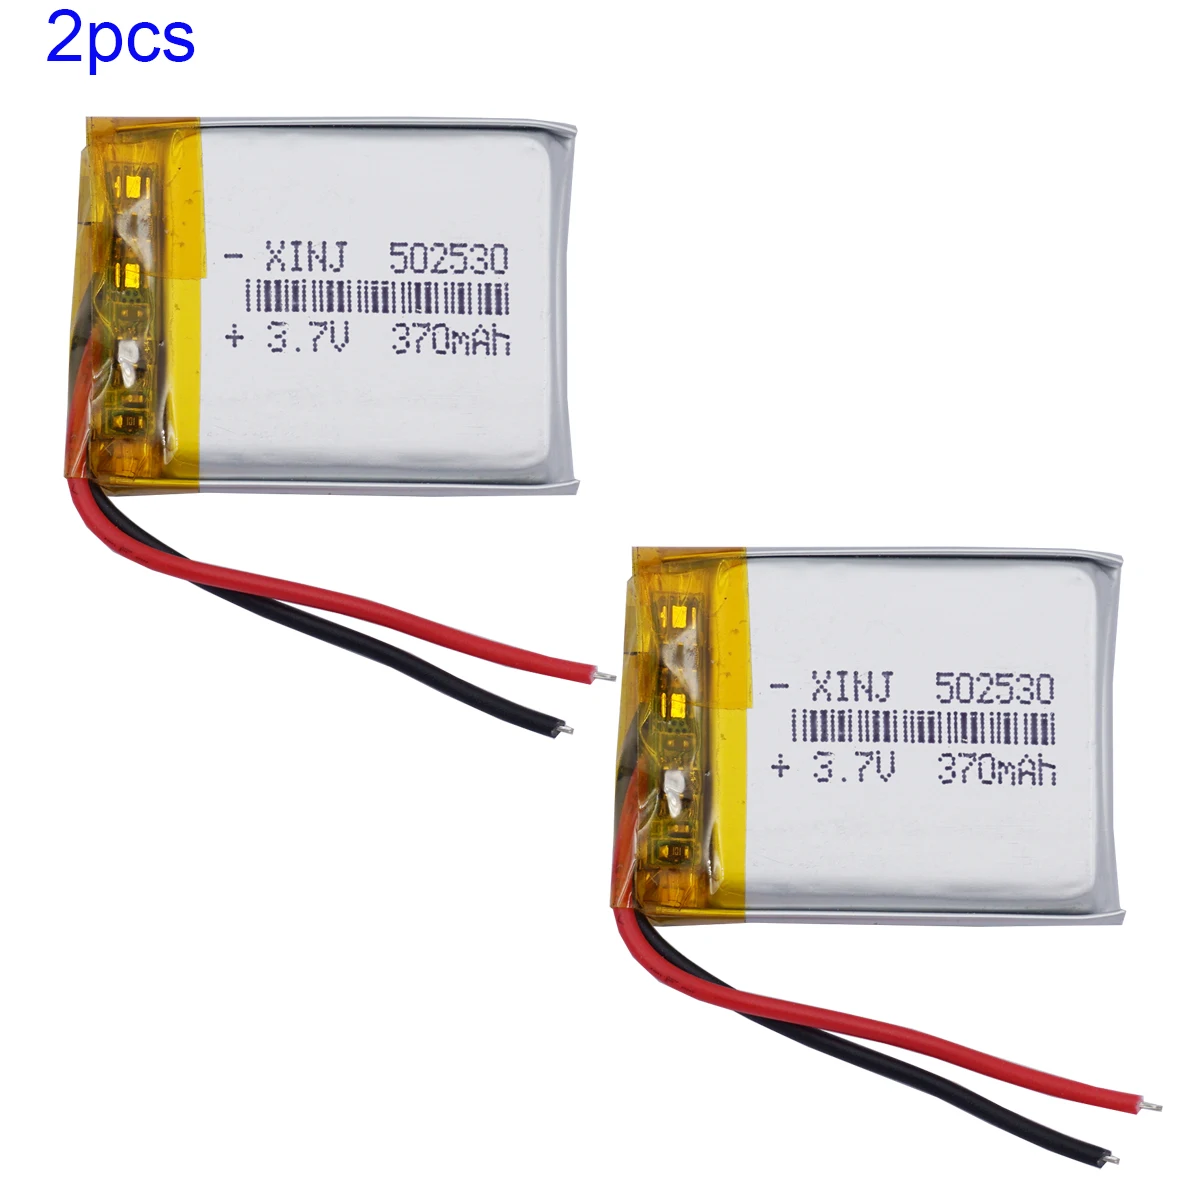 

2pcs 3.7V 370mAh Rechargeable Polymer Lithium Lipo Battery 502530 For Car Camera DashCam GPS Sat Nav Bluetooth Speaker LED Light